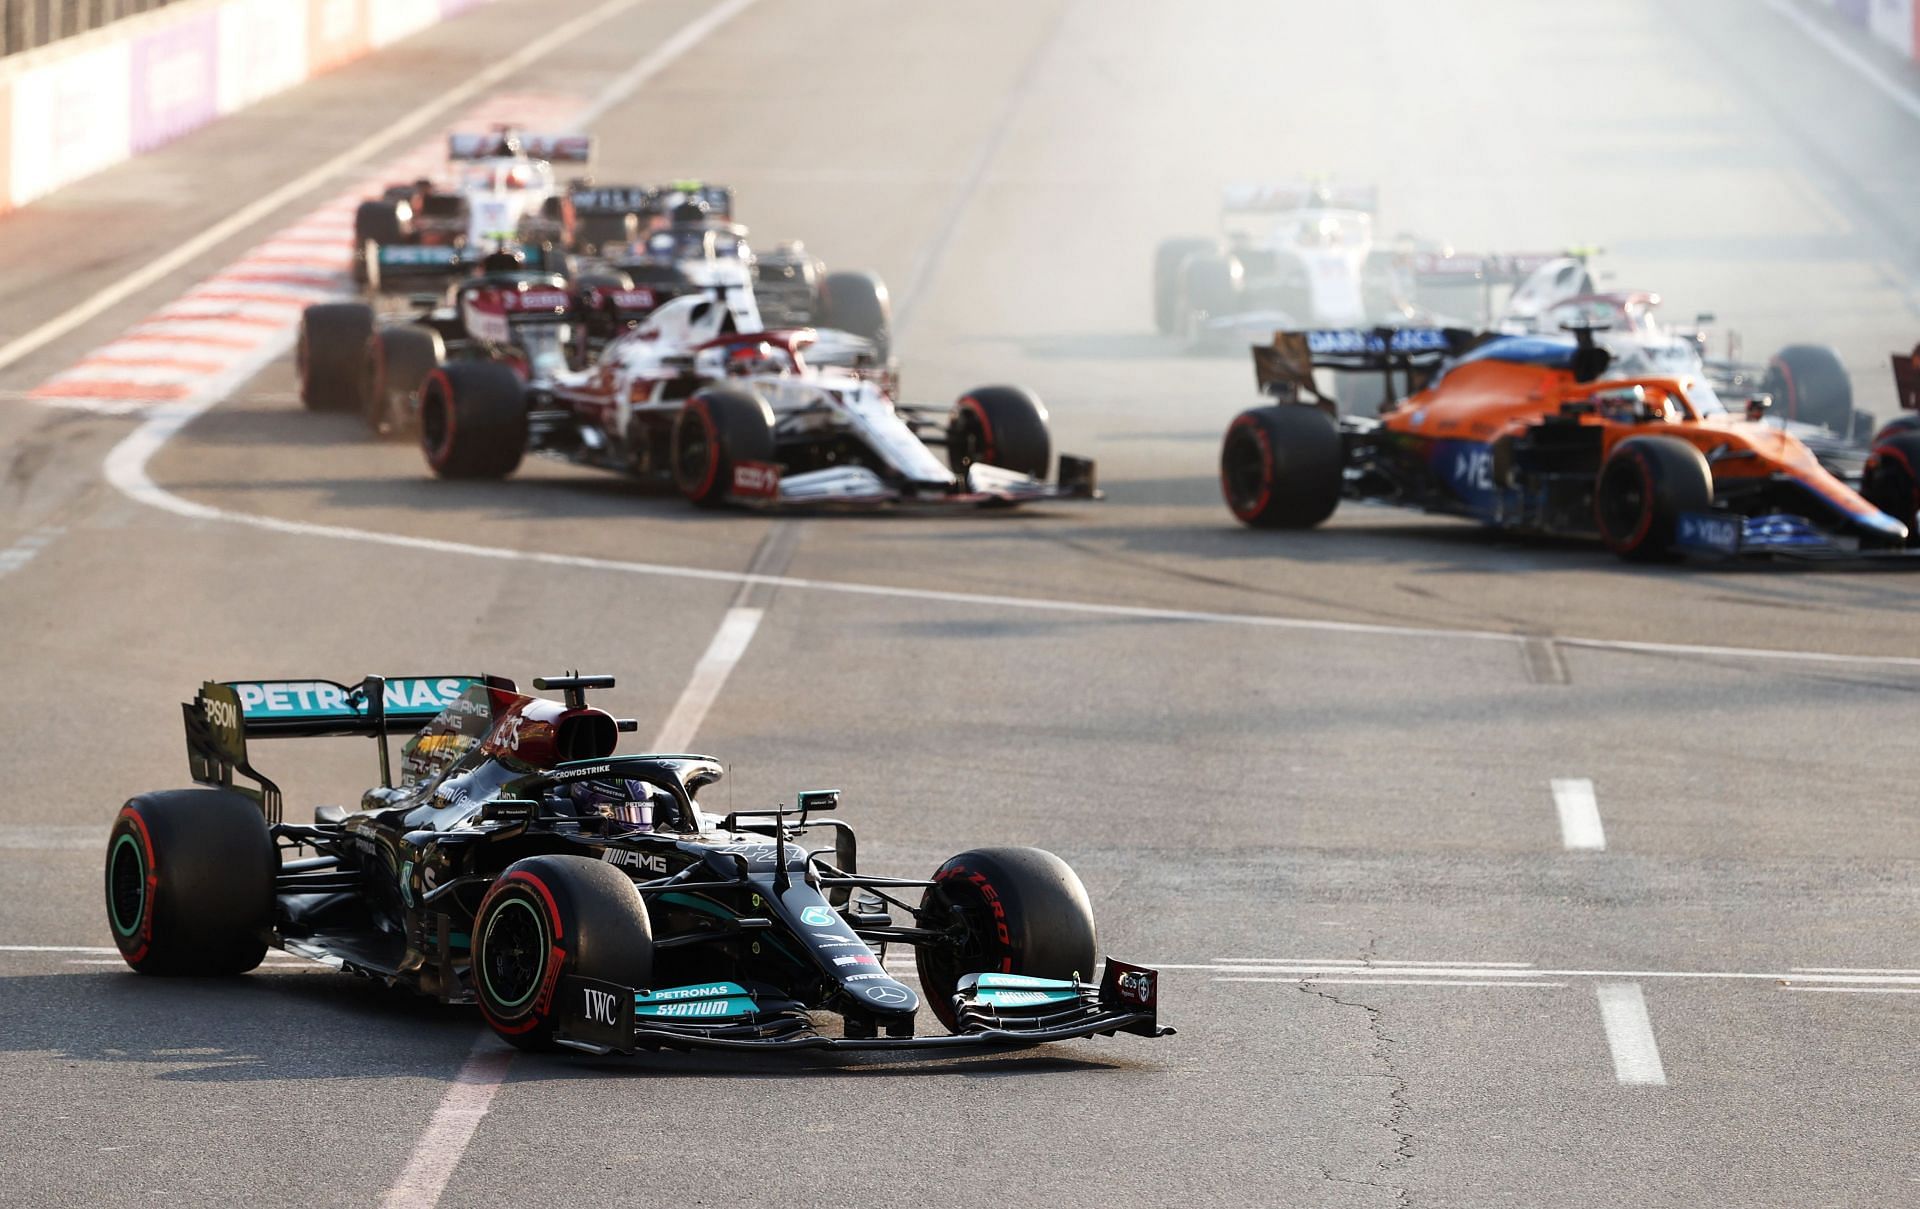 The Azerbaijan GP last season featured Lewis Hamilton having a disastrous restart